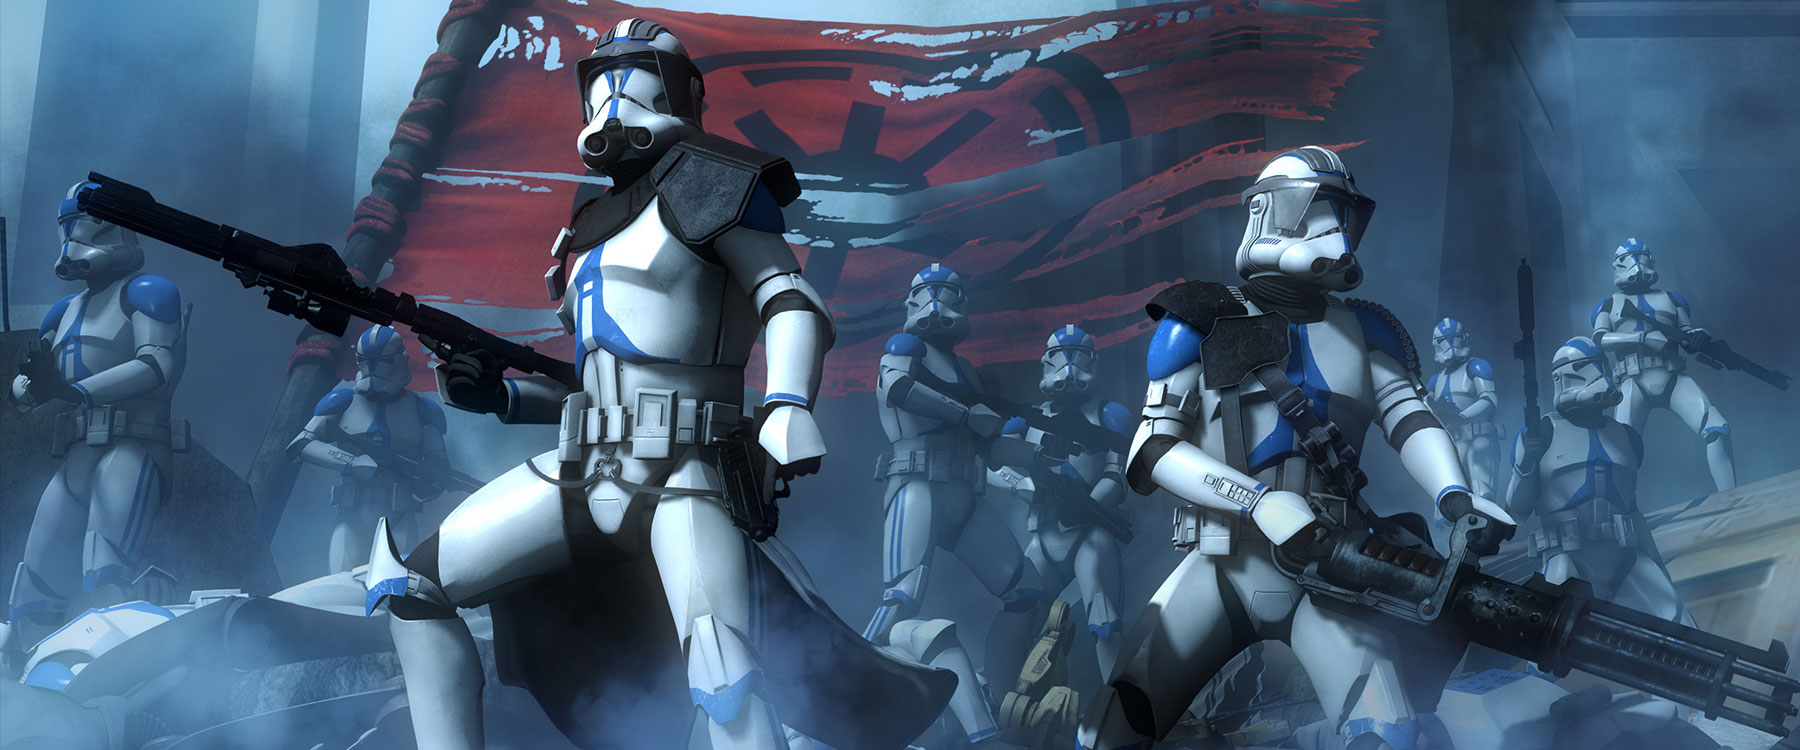 Star Wars: A klónok háborúja (Star Wars: The Clone Wars)